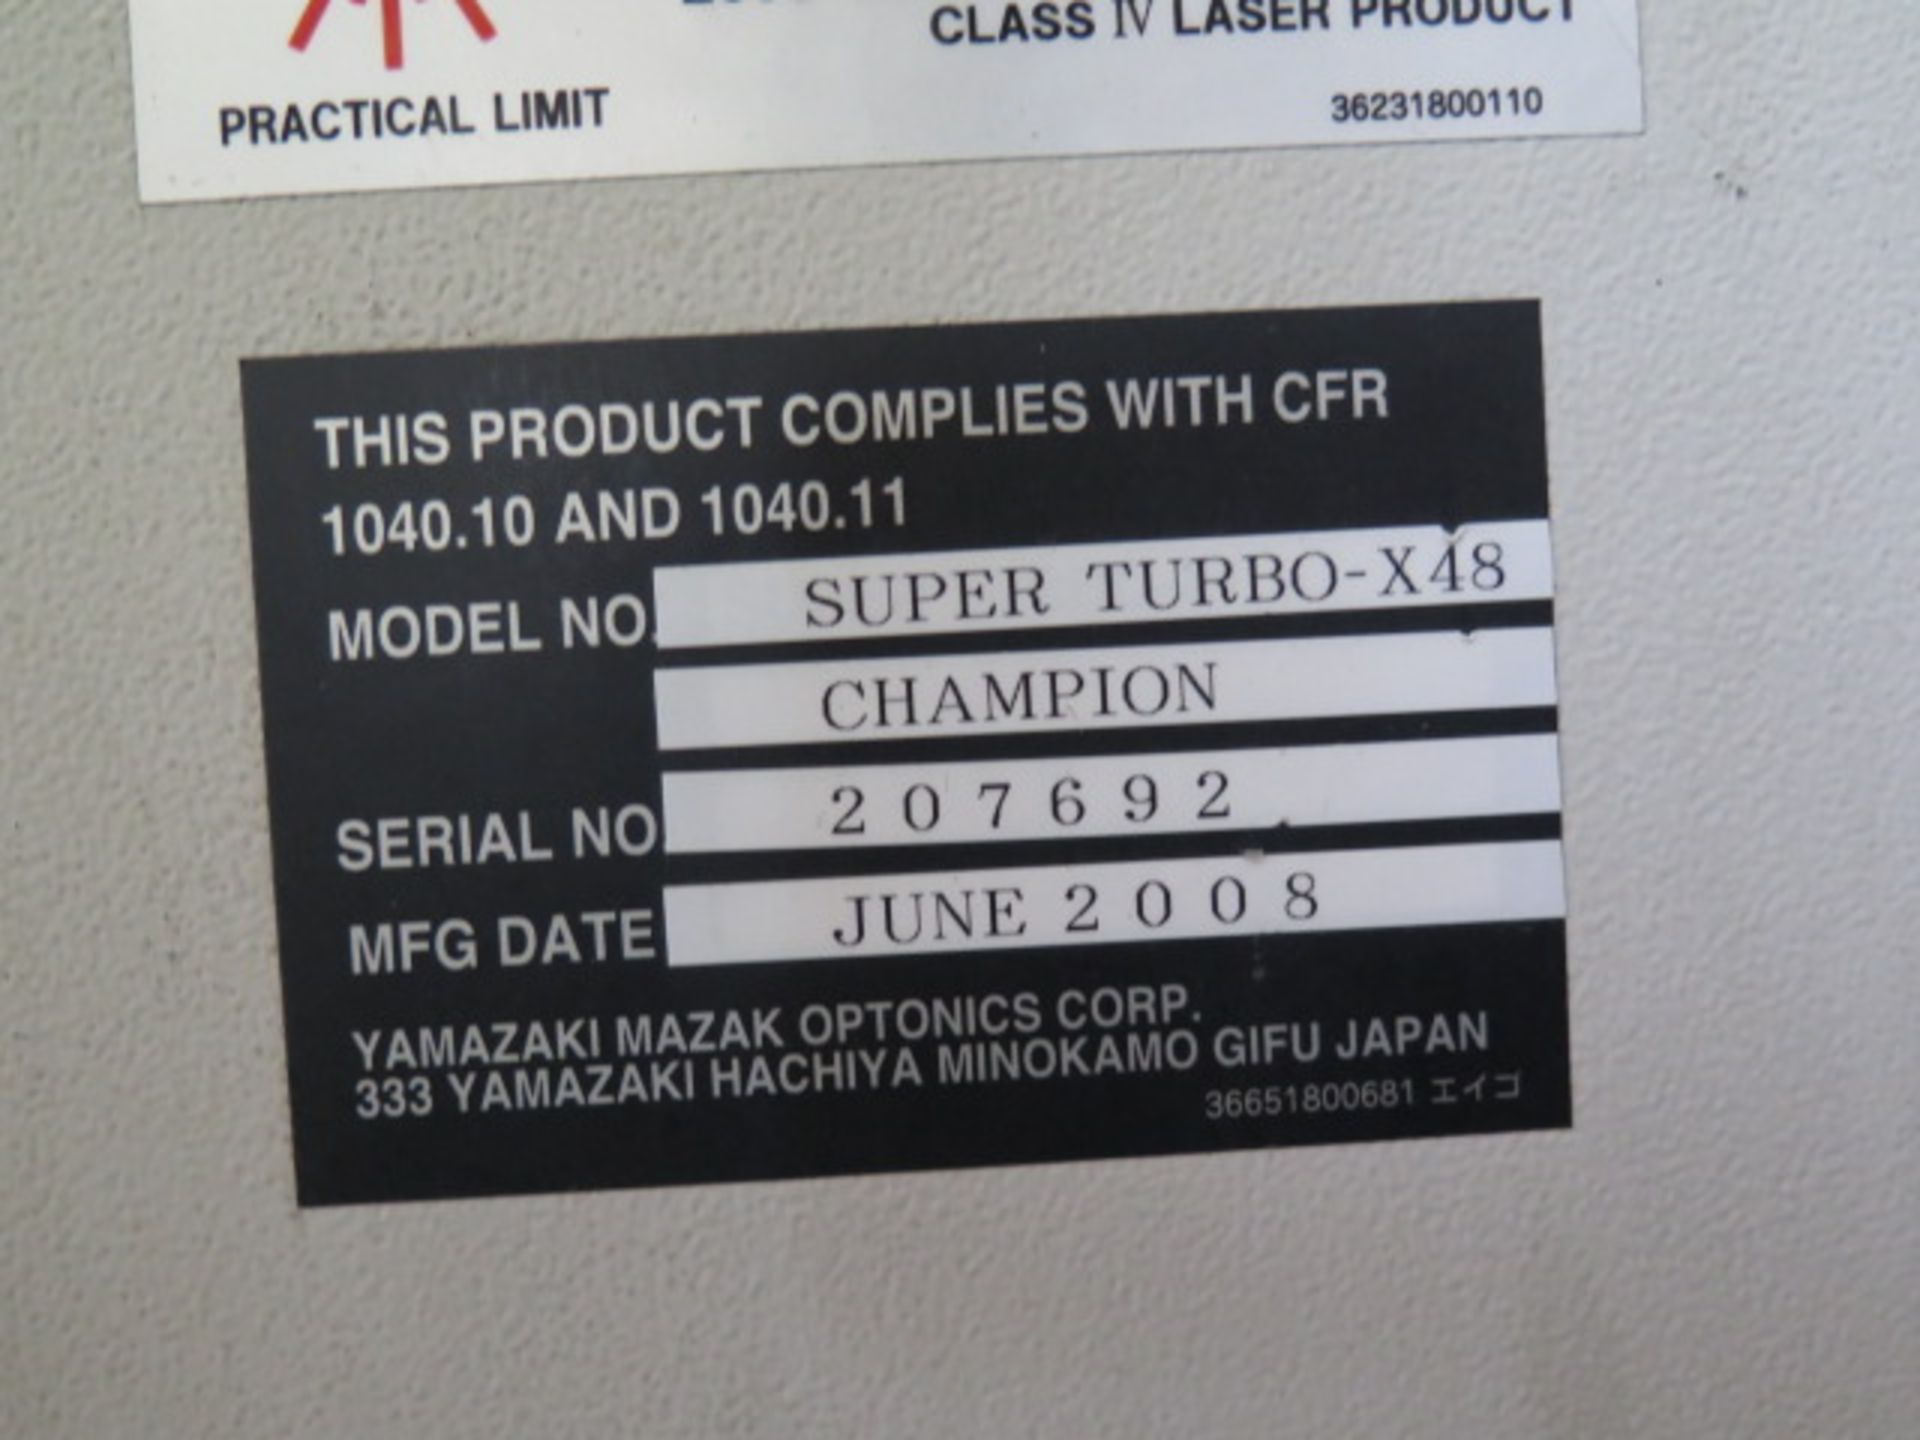 2008 Mazak “Super Turbo – X48 Champion” 1300 Watt 4’ x 8’ CNC Laser Machine s/n 207692, SOLD AS IS - Image 13 of 32